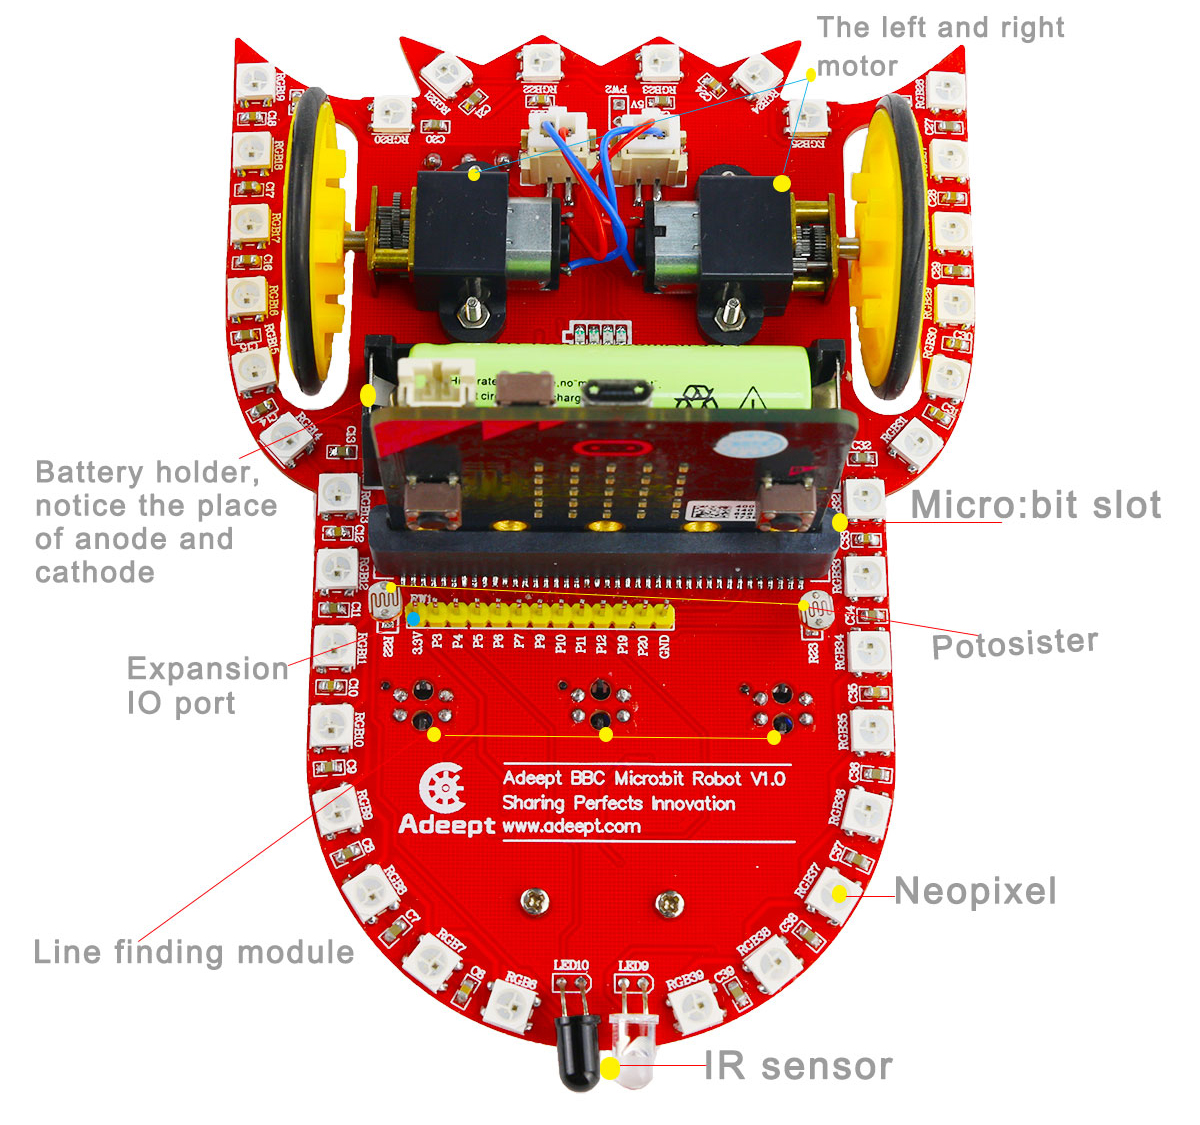 Kit de Auto Robot Inteligente Starry:bit de Adeept c/ BBC micro:bit